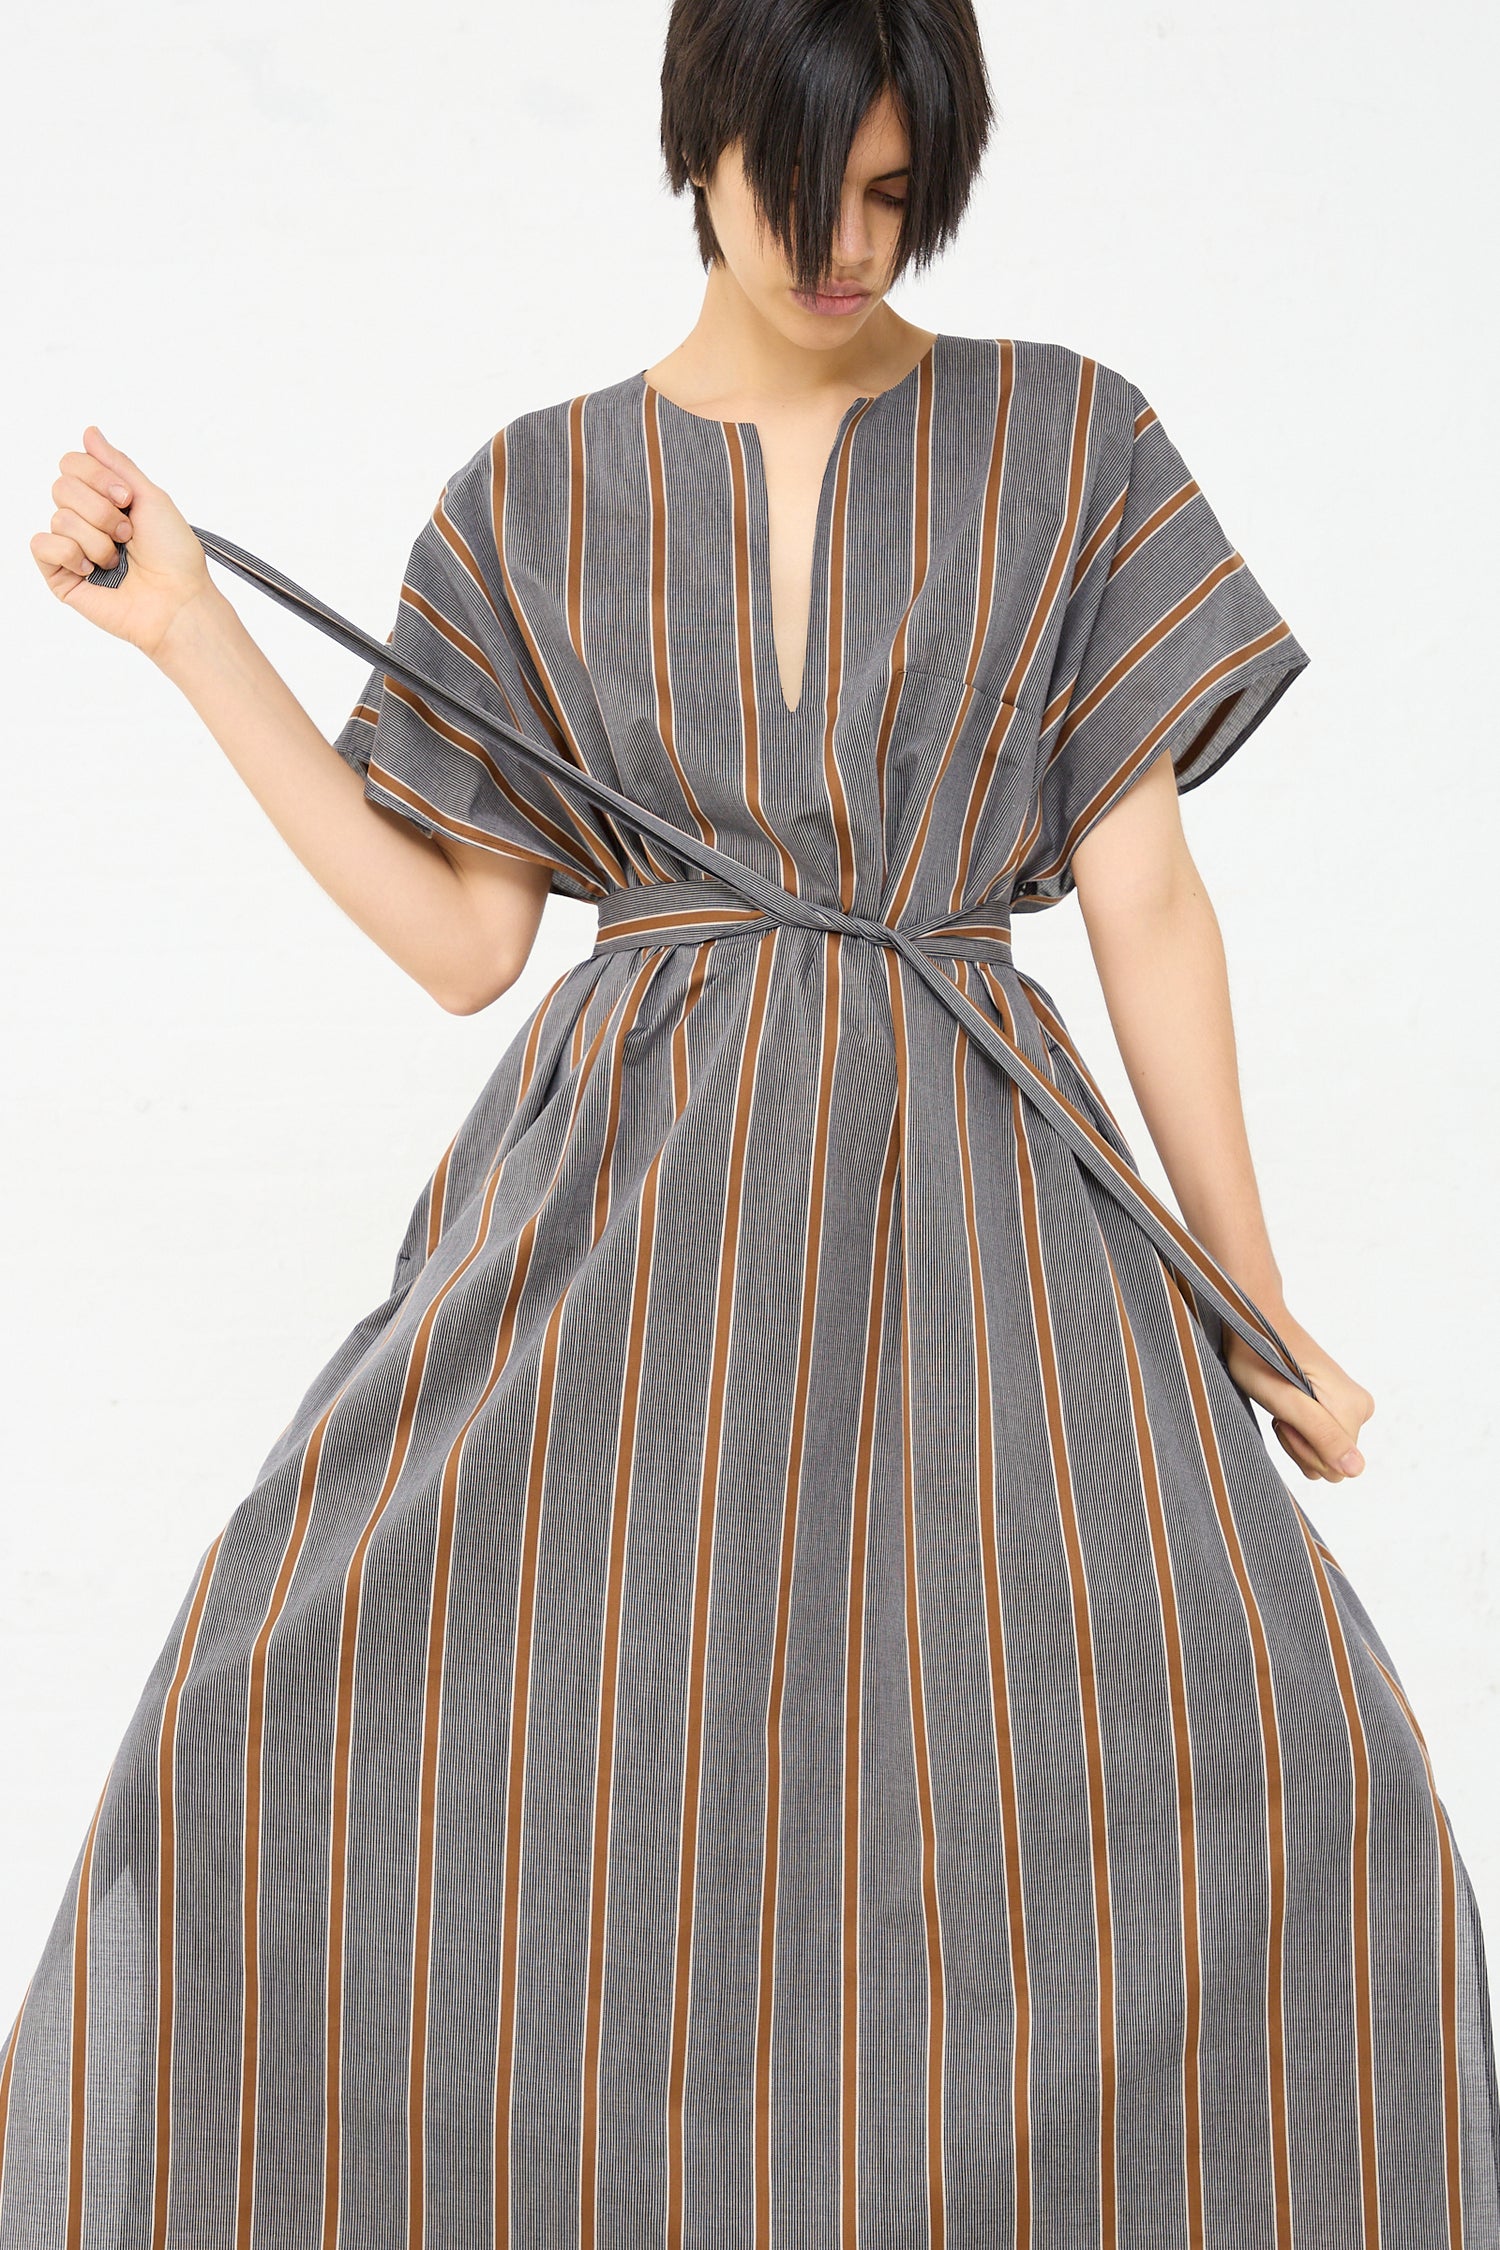 The model is wearing an oversized caftan with a stripe pattern by Cristaseya.